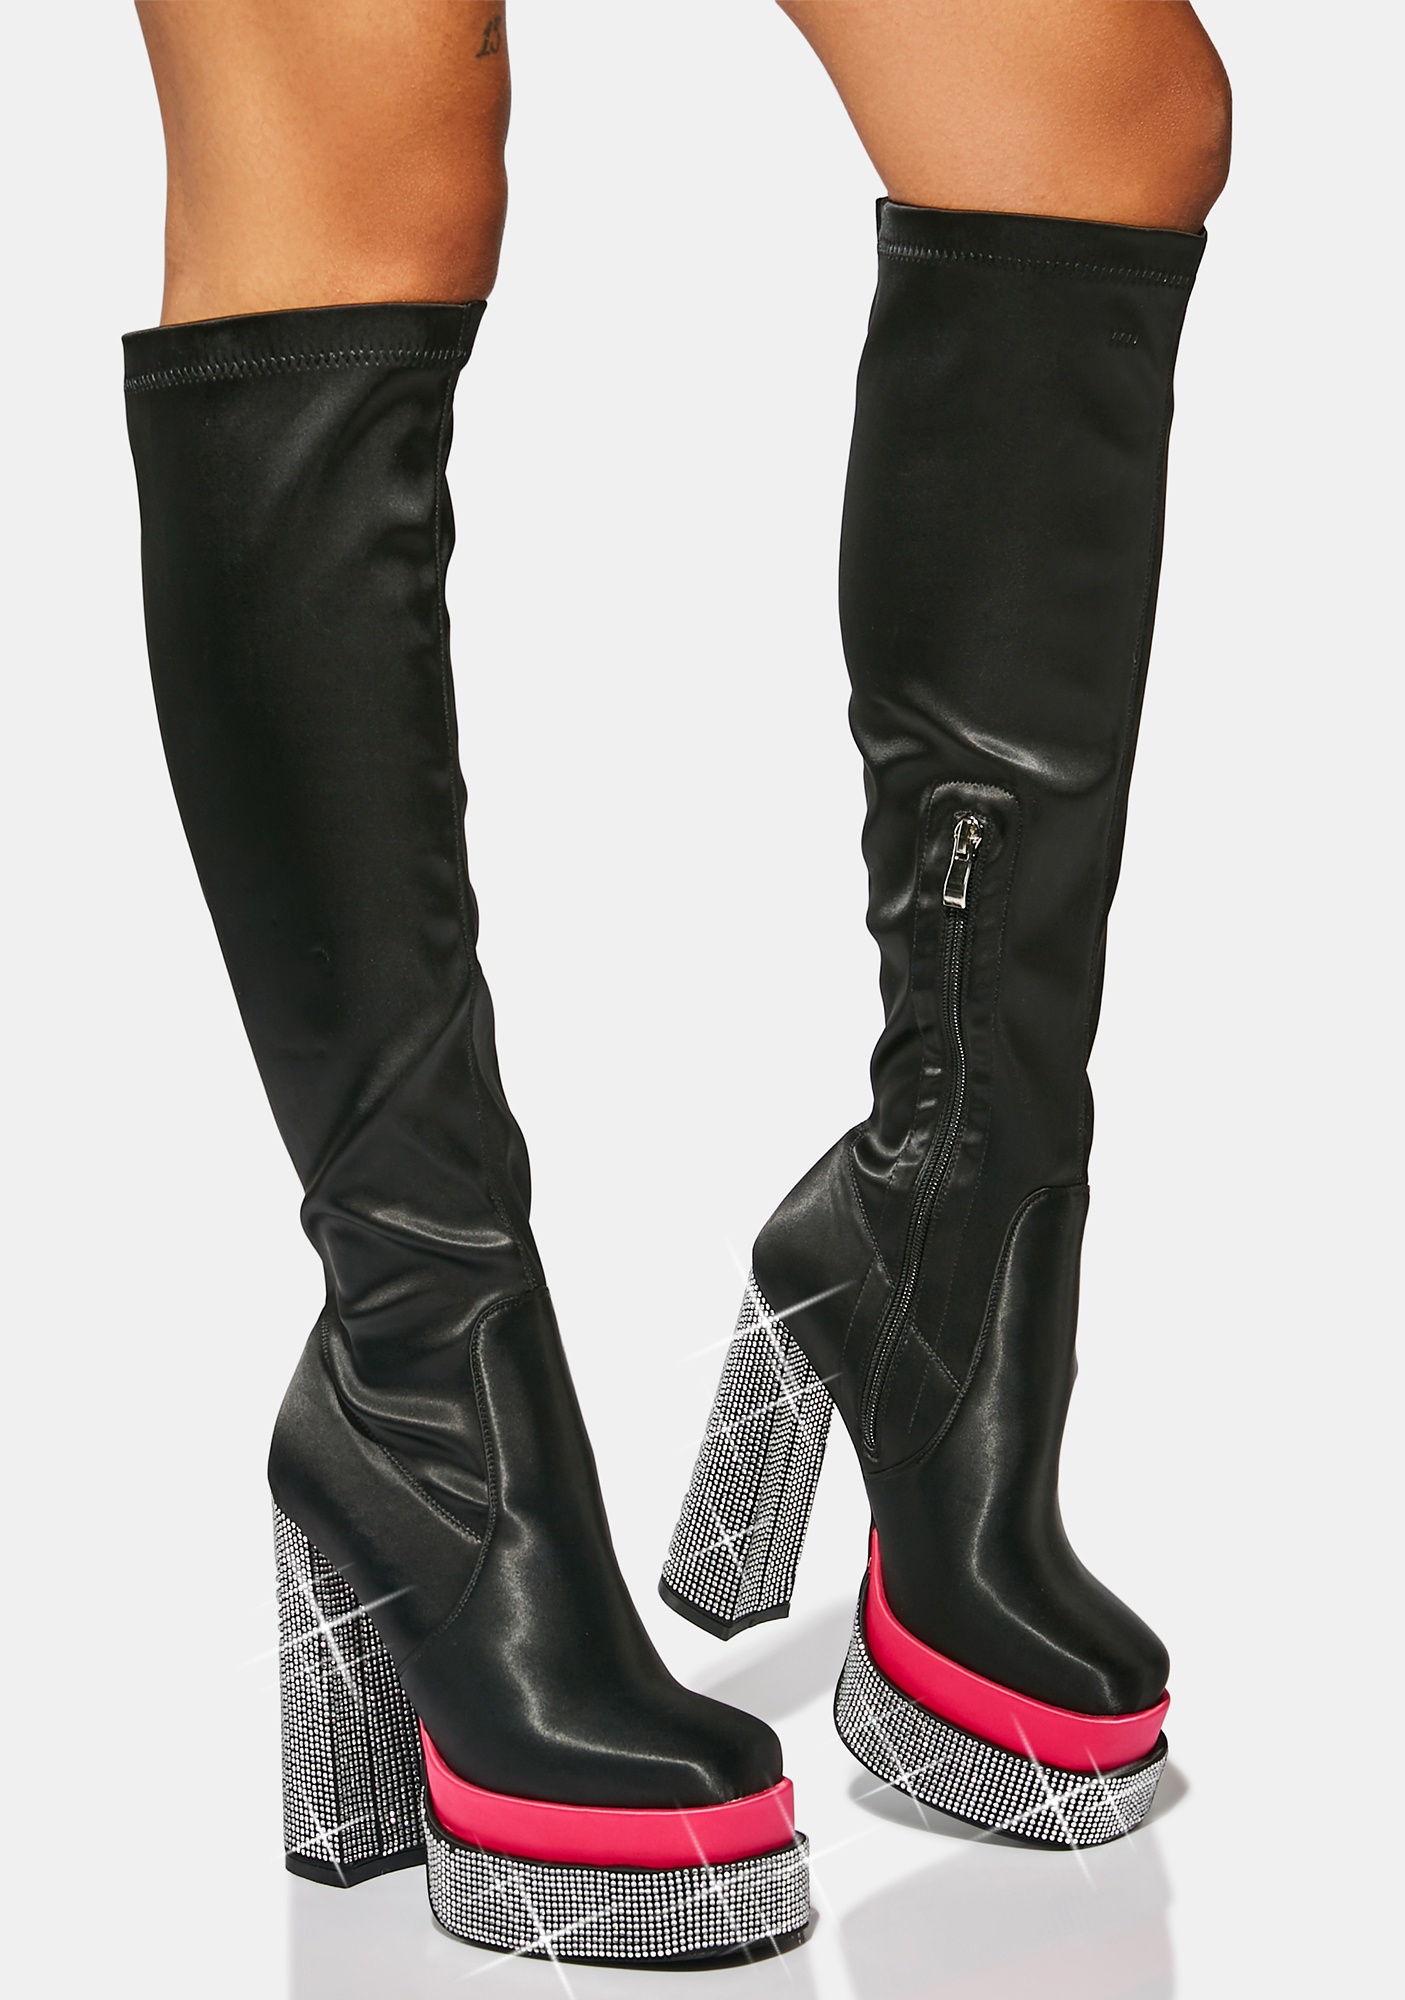 Azalea Wang Name Your Price Knee High Boots - Black/Pink | Dolls Kill